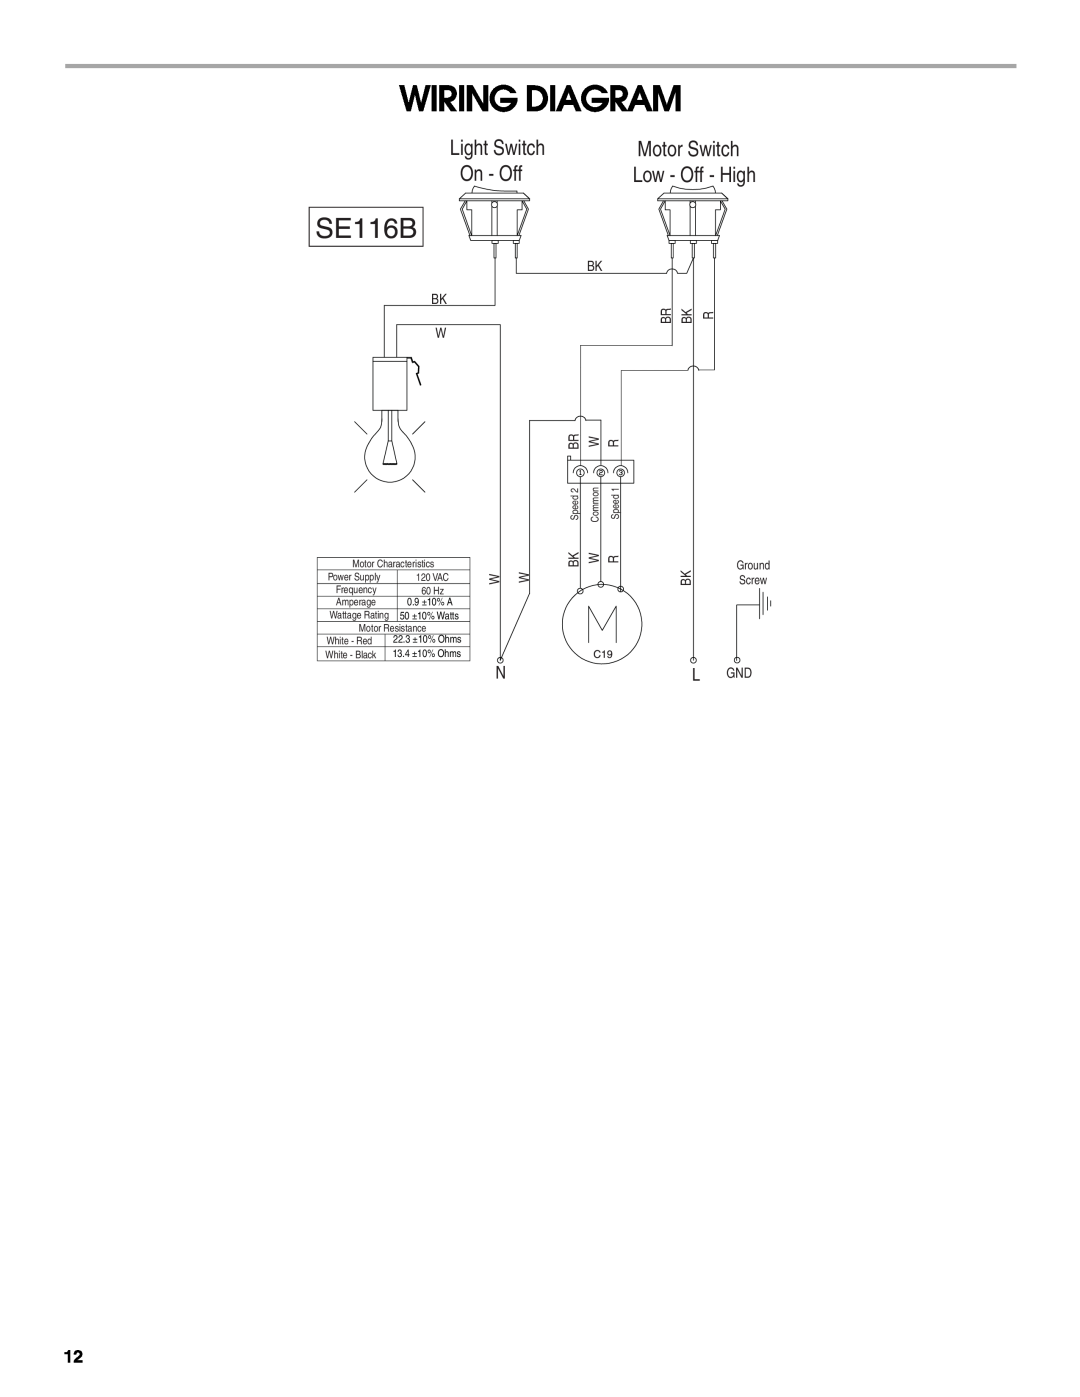 Whirlpool UXT3036AY, LI3Z3A Wiring Diagram, SE116B, Light Switch, On - Off, Motor Switch, Low - Off - High, Ground Screw 